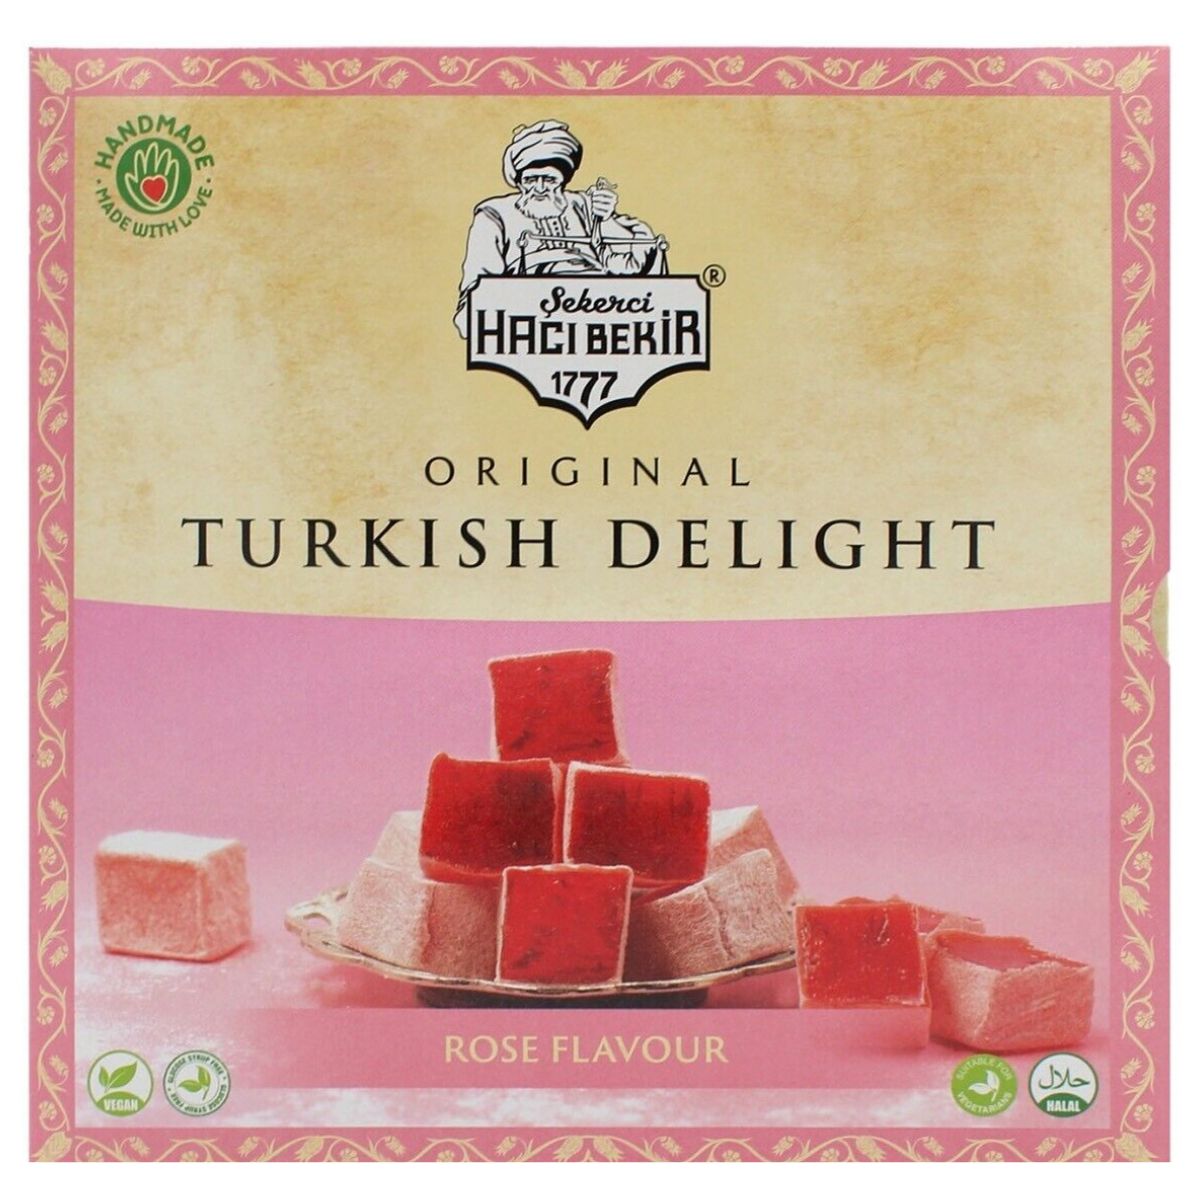 A box of Haci bekir - Original Turkish Delight Rose - 320g.